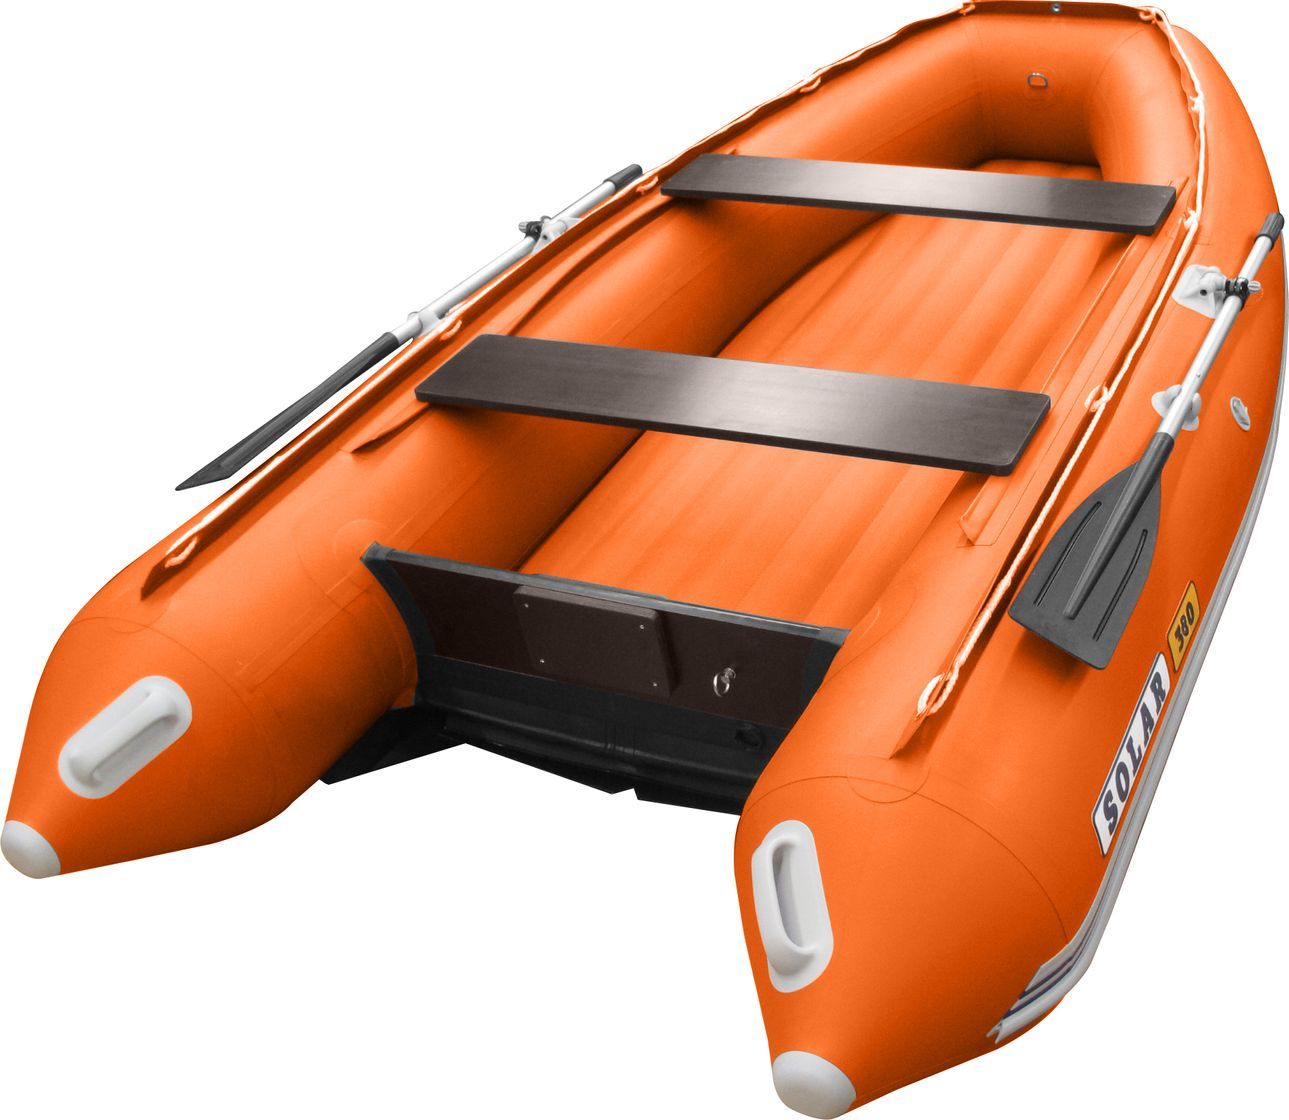 Надувная лодка ПВХ SOLAR-350 К (Максима), оранжевый SLR350k_max_orange надувная лодка пвх solar 330 к оптима оранжевый slr330k opt orange